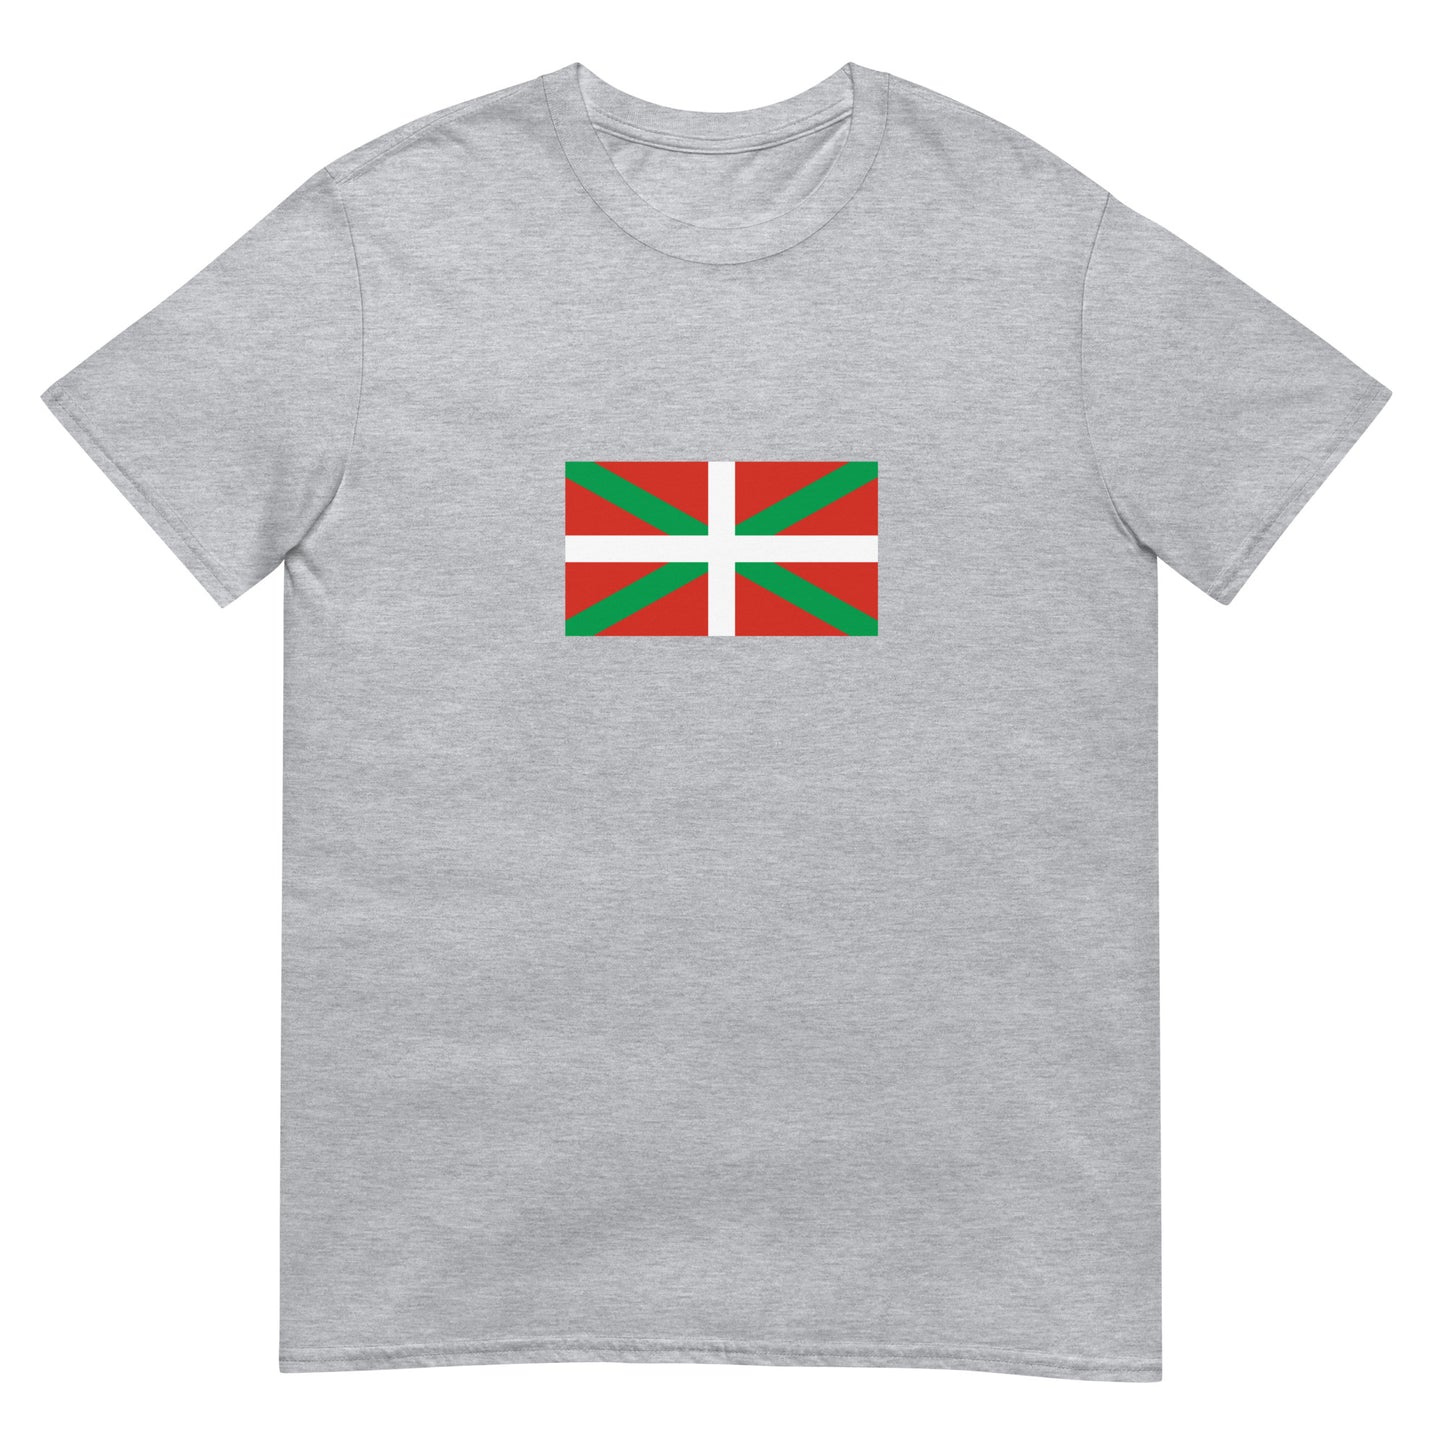 Spain - Basques | Ethnic Spanish Flag Interactive T-shirt